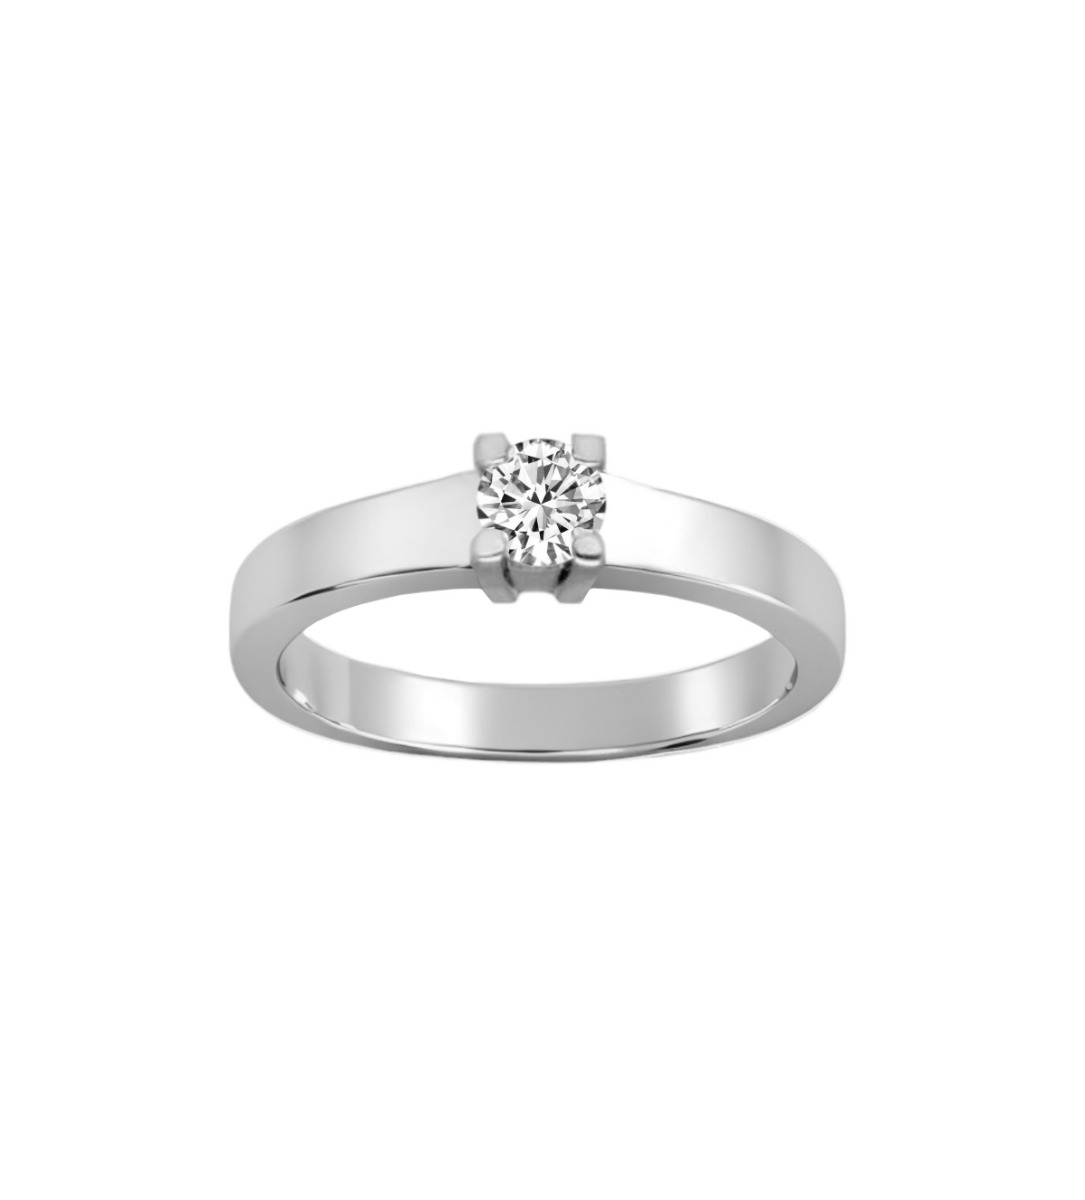 anillo compromiso oro blanco 18 kilates con diamante talla brillante o,25 quilates fotografia para web el rubi joyeros tomo frontal